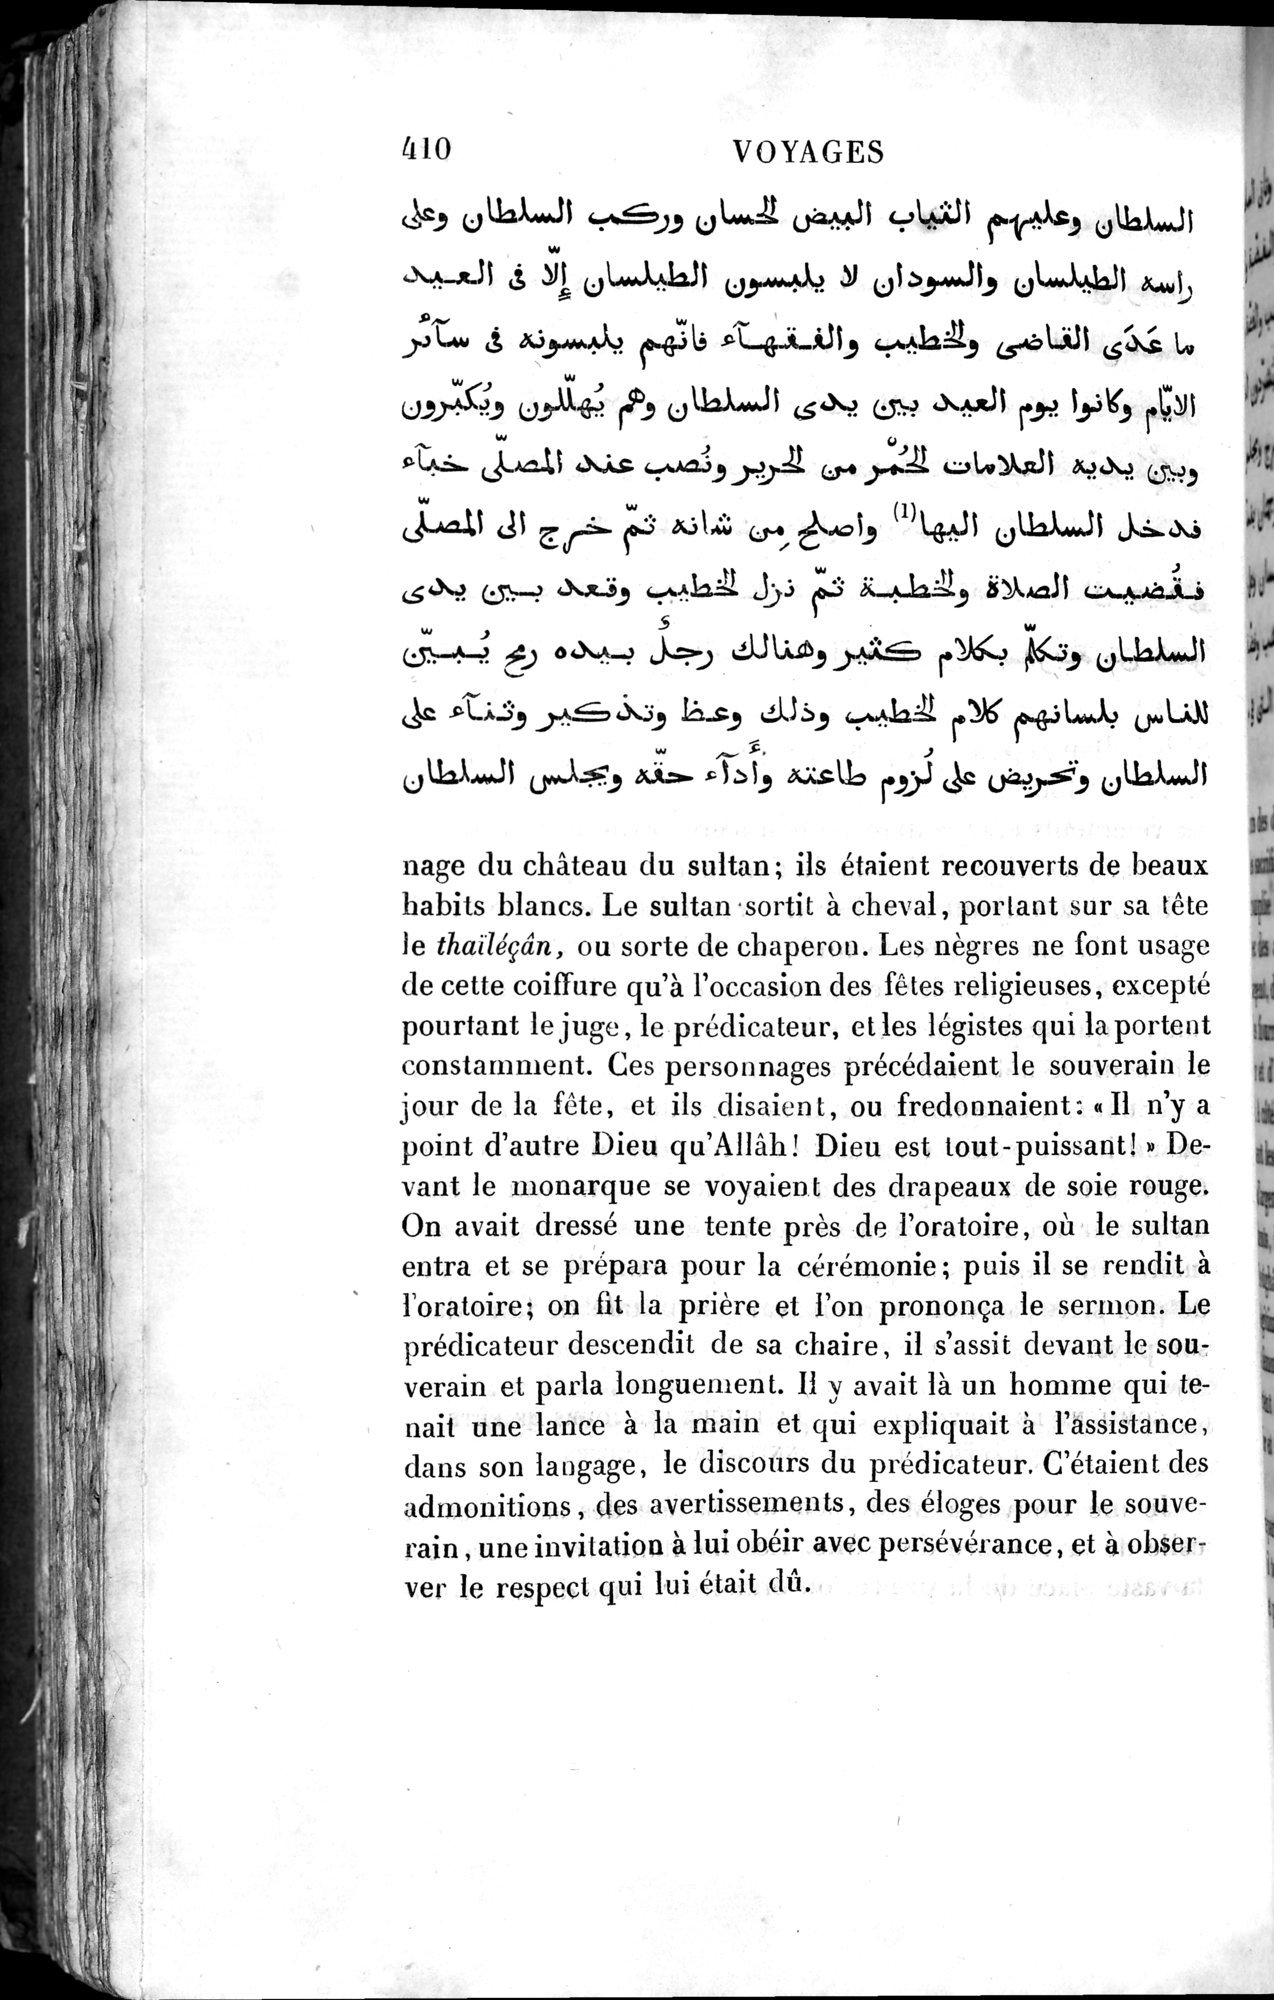 Voyages d'Ibn Batoutah : vol.4 / 422 ページ（白黒高解像度画像）